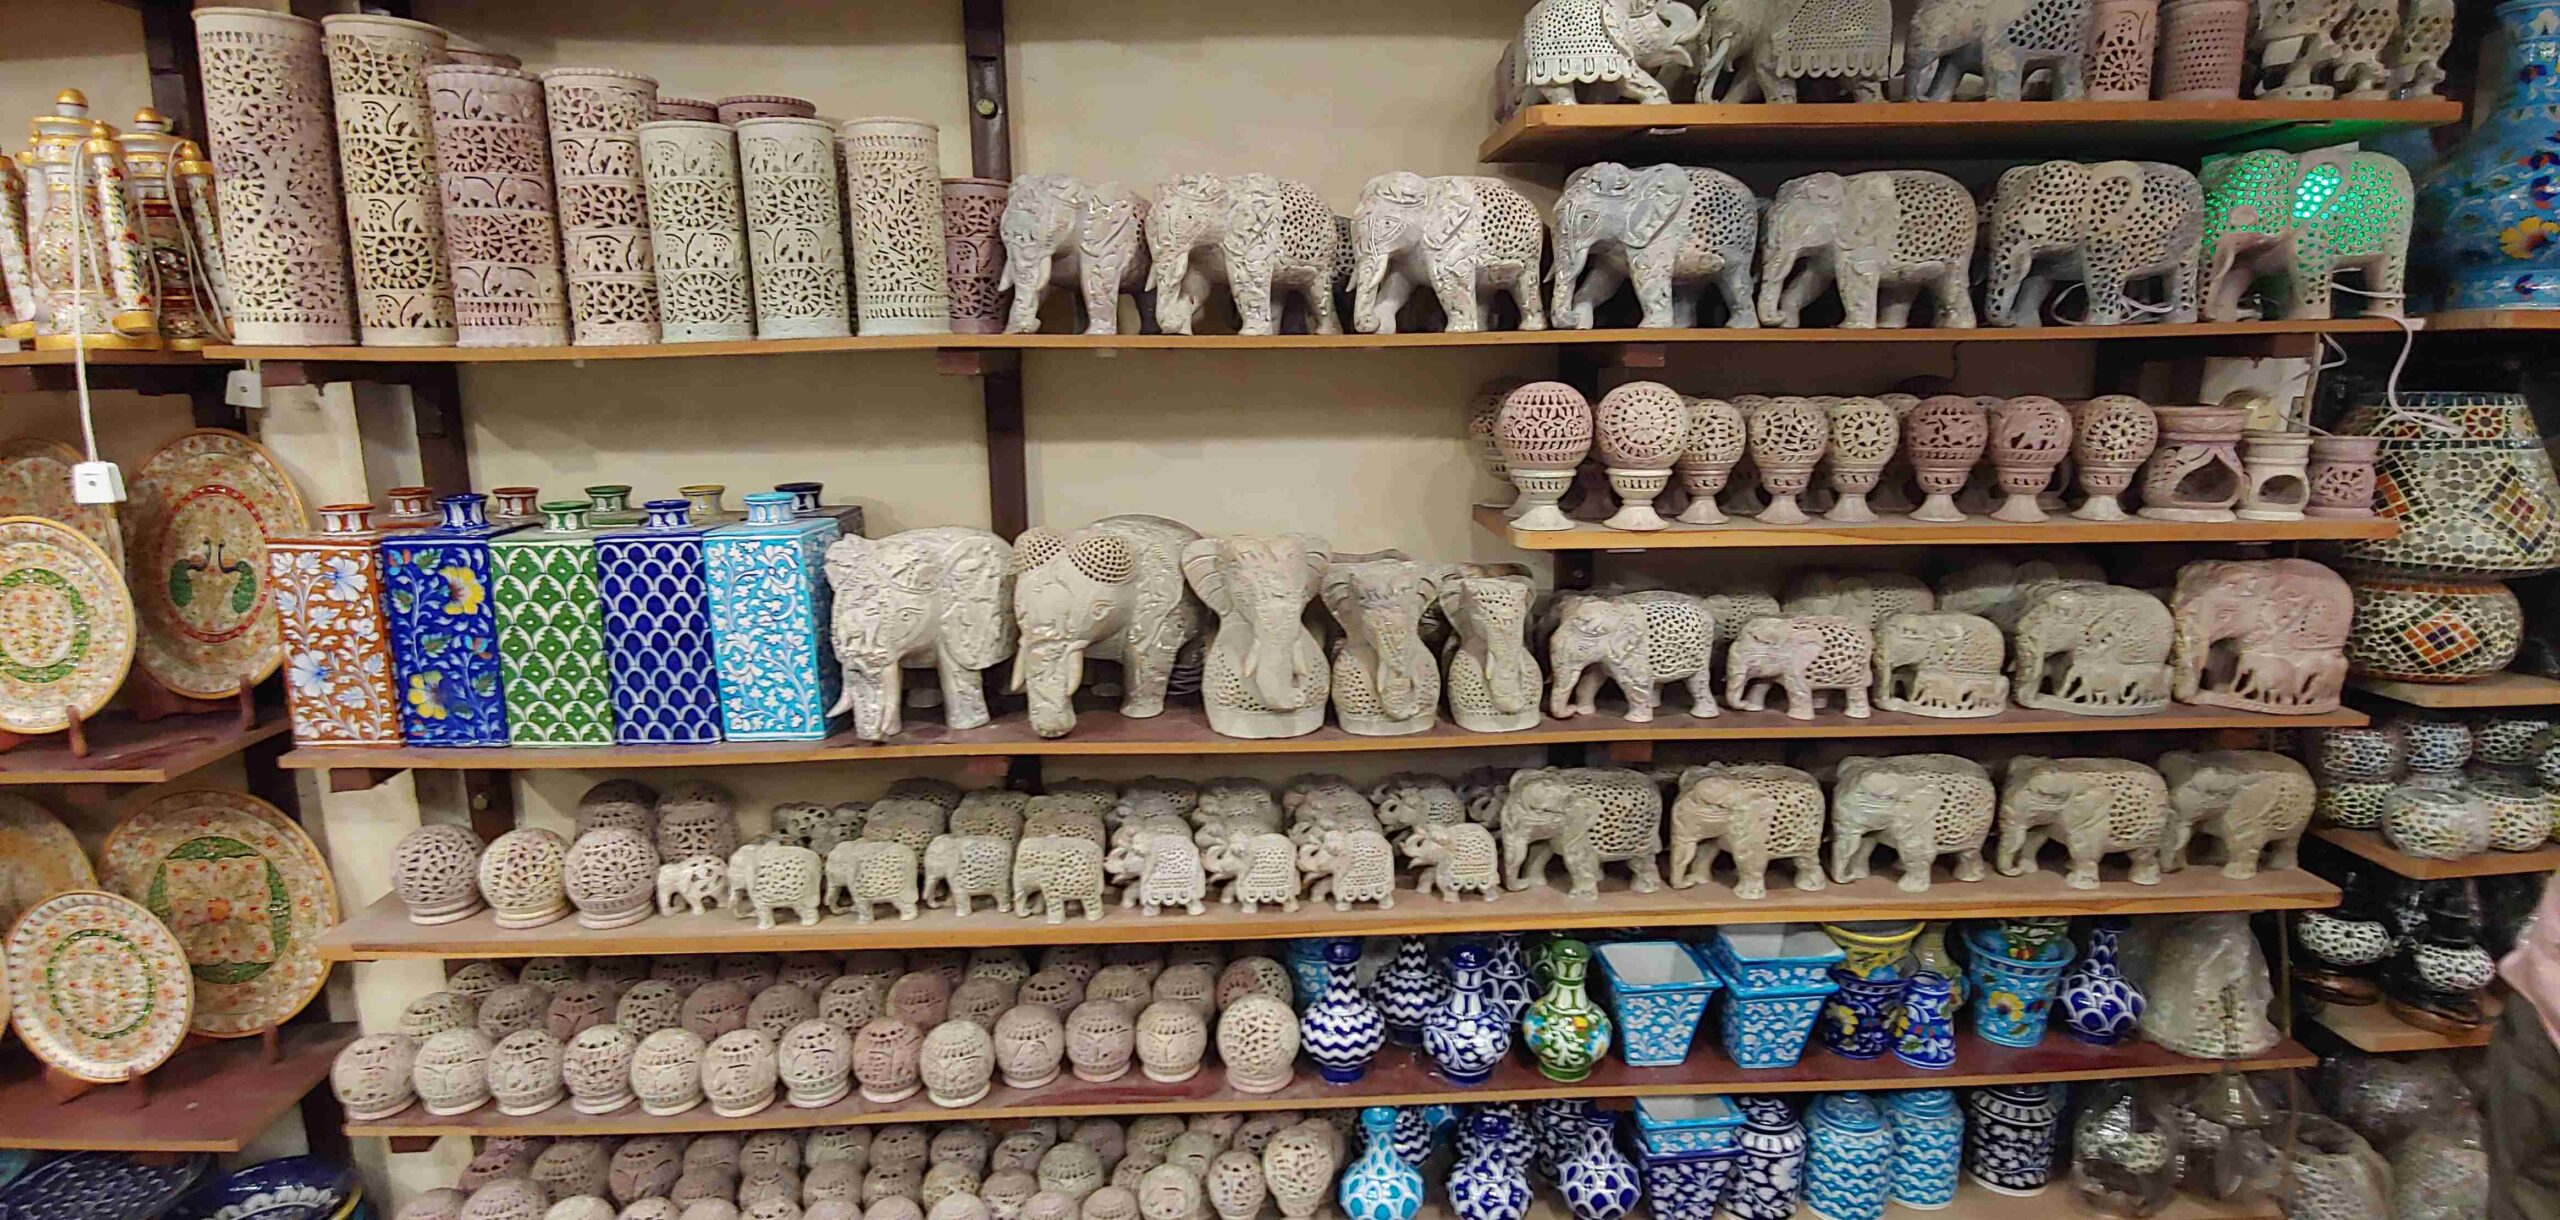 a shelf full of ceramic elephants